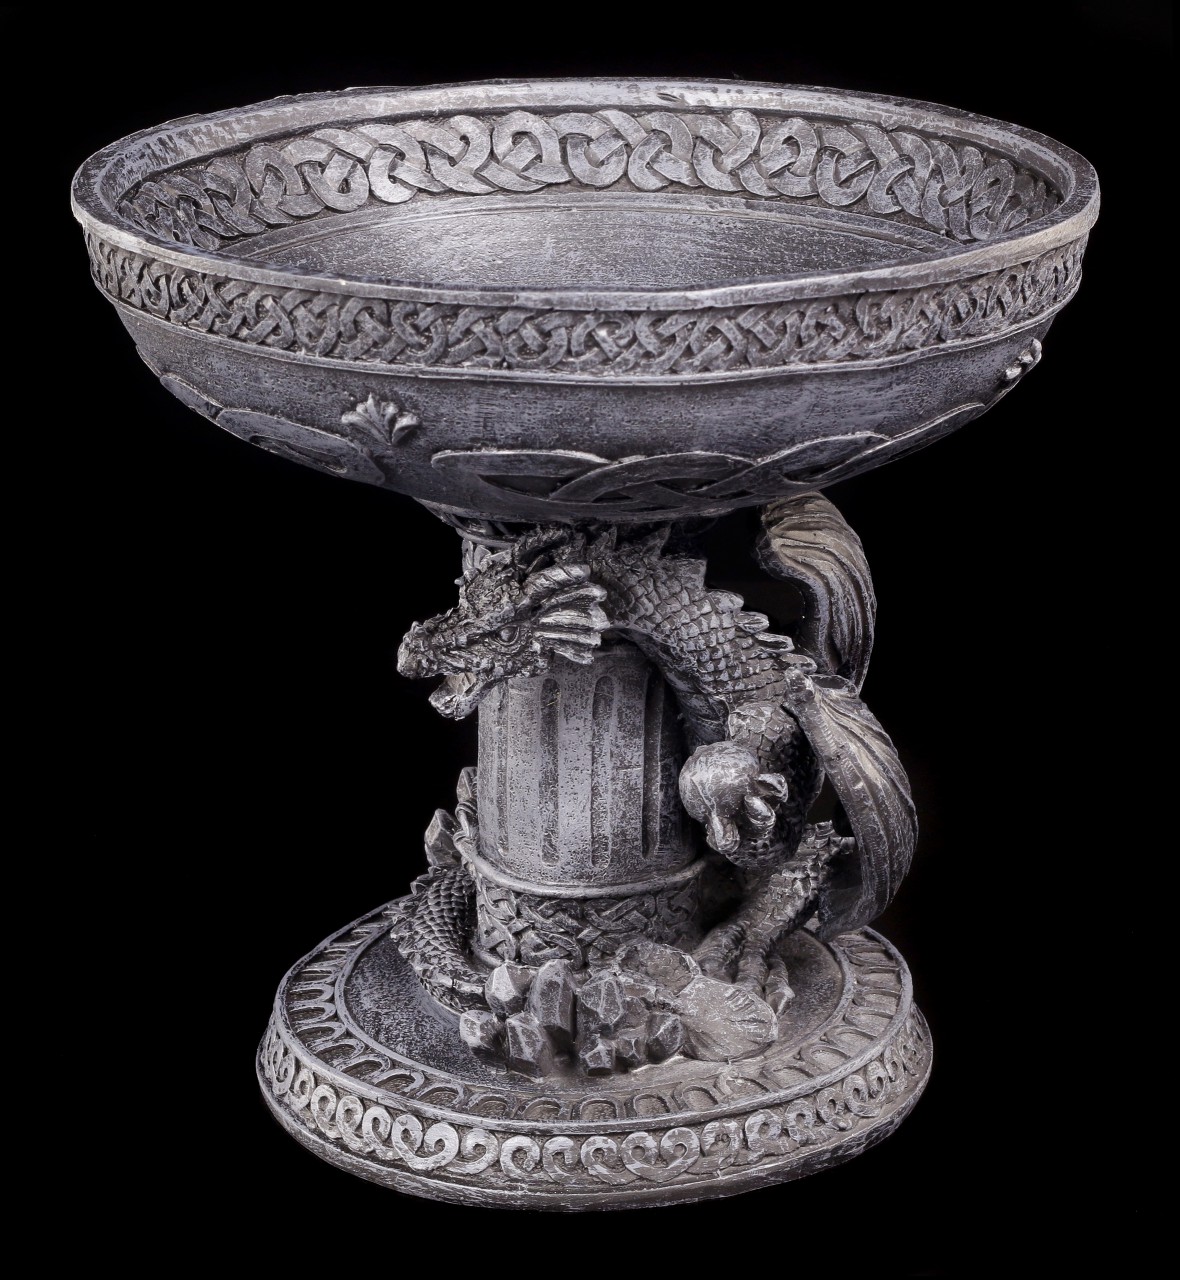 Dragon Figurine on Column with Bowl